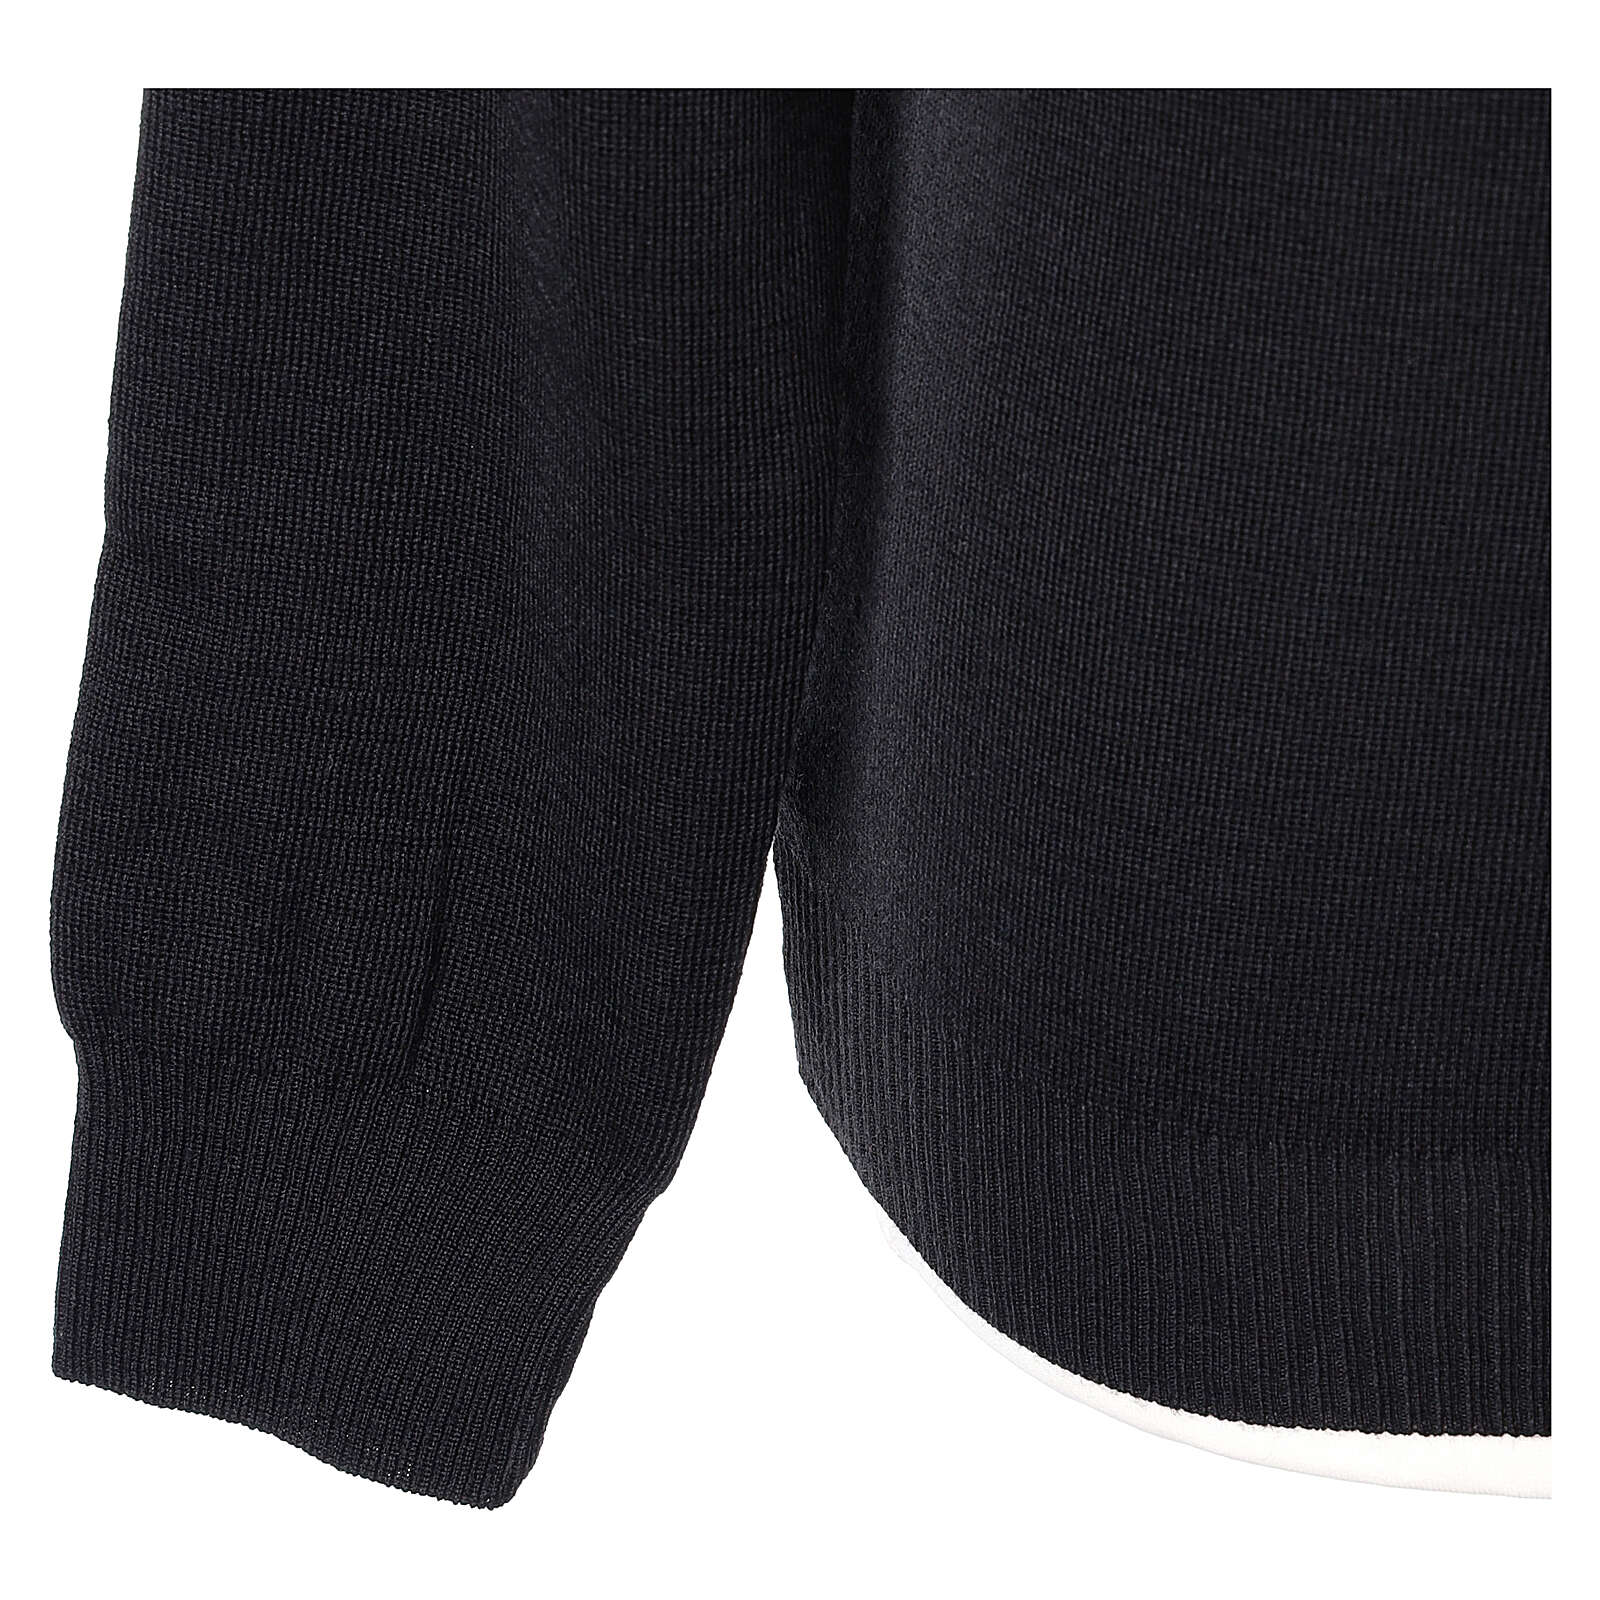 Crew neck clergy black jumper plain fabric 50% acrylic 50% | online ...